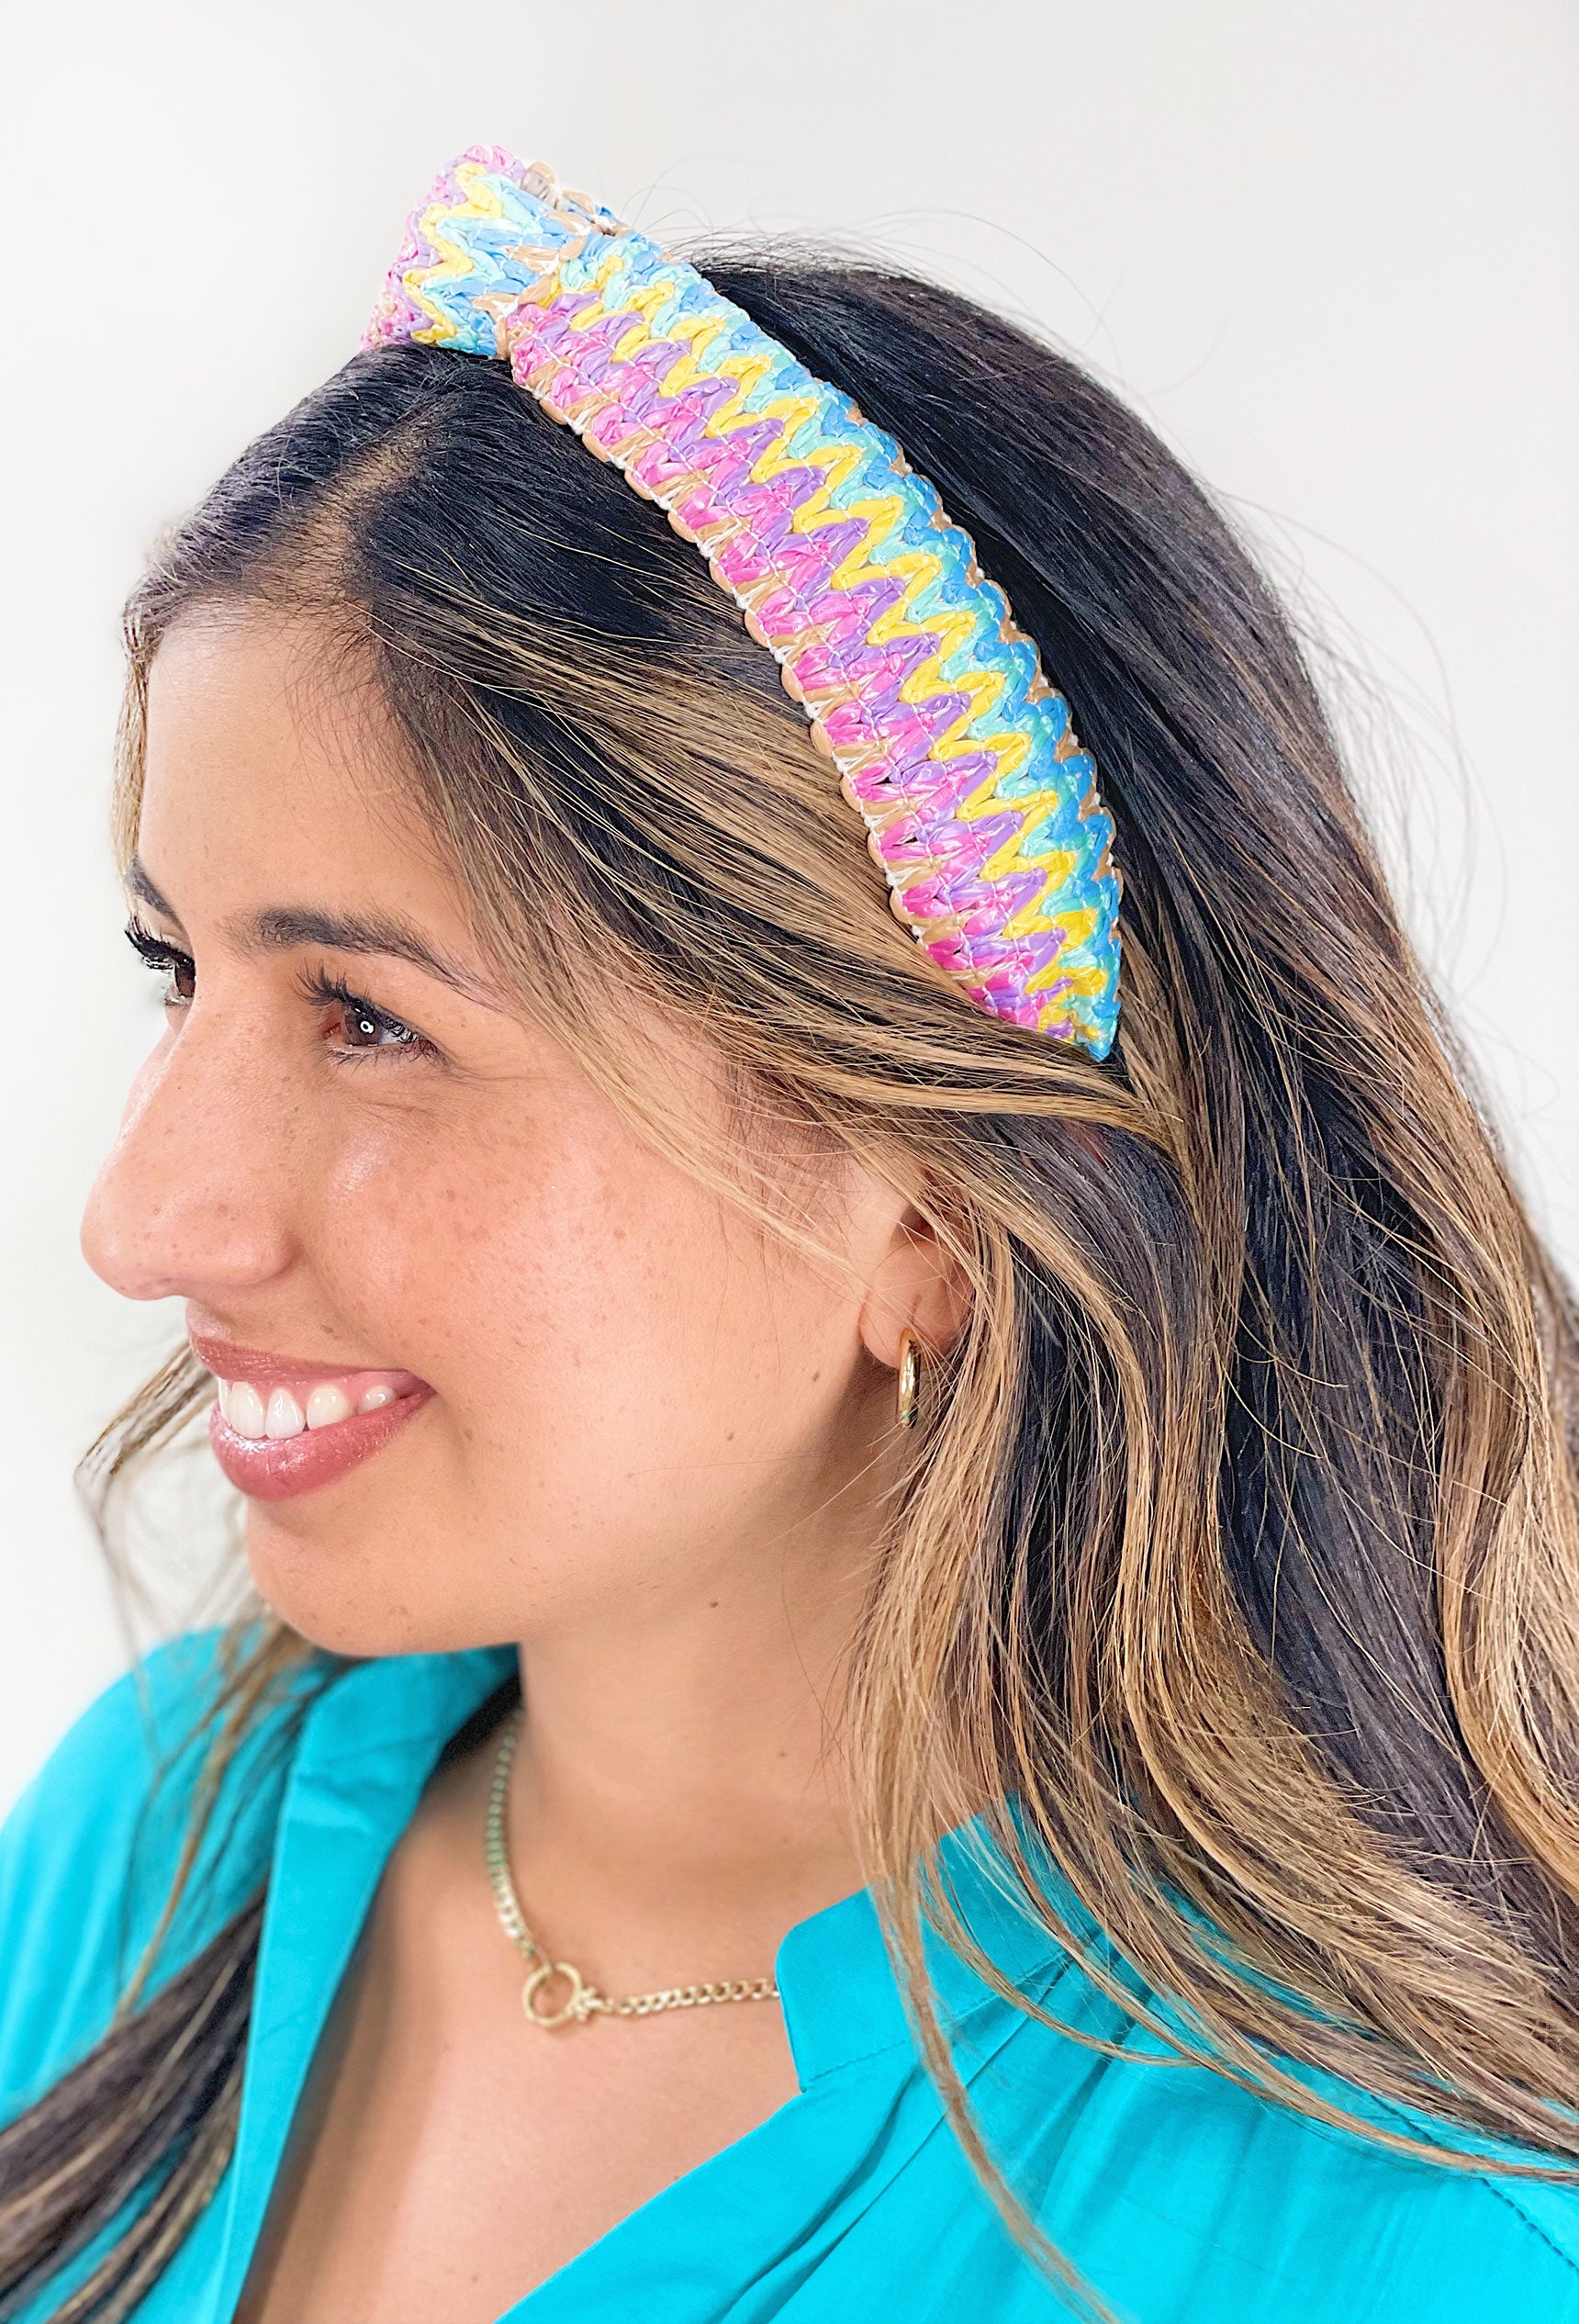 Alexis Woven Headband in Tan, colorful raffia headband